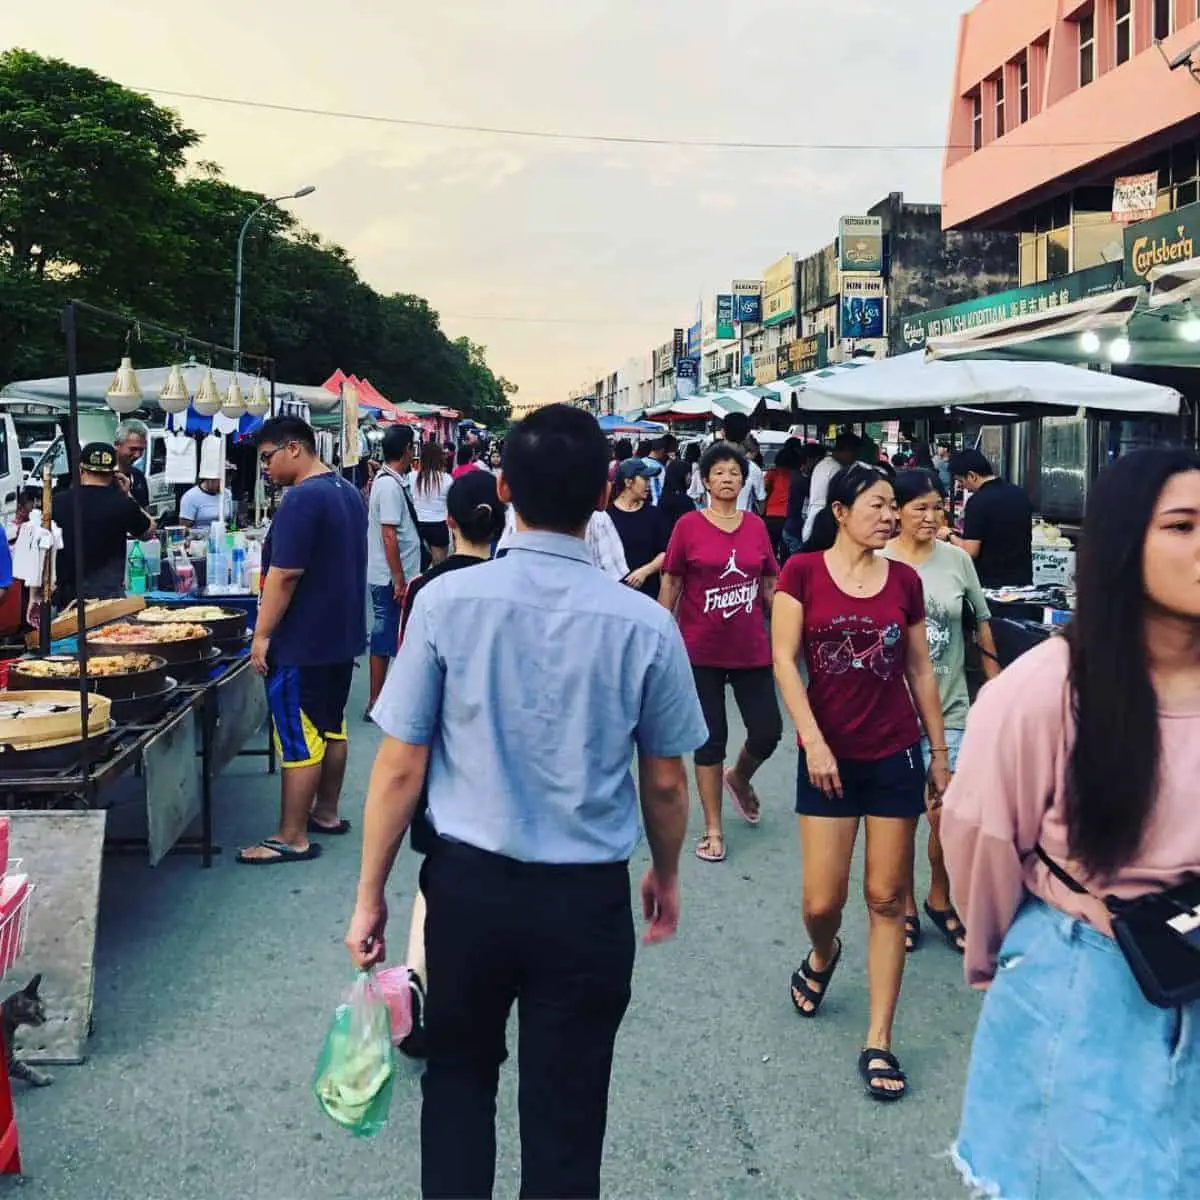  Nibong Tebal Night market crowded